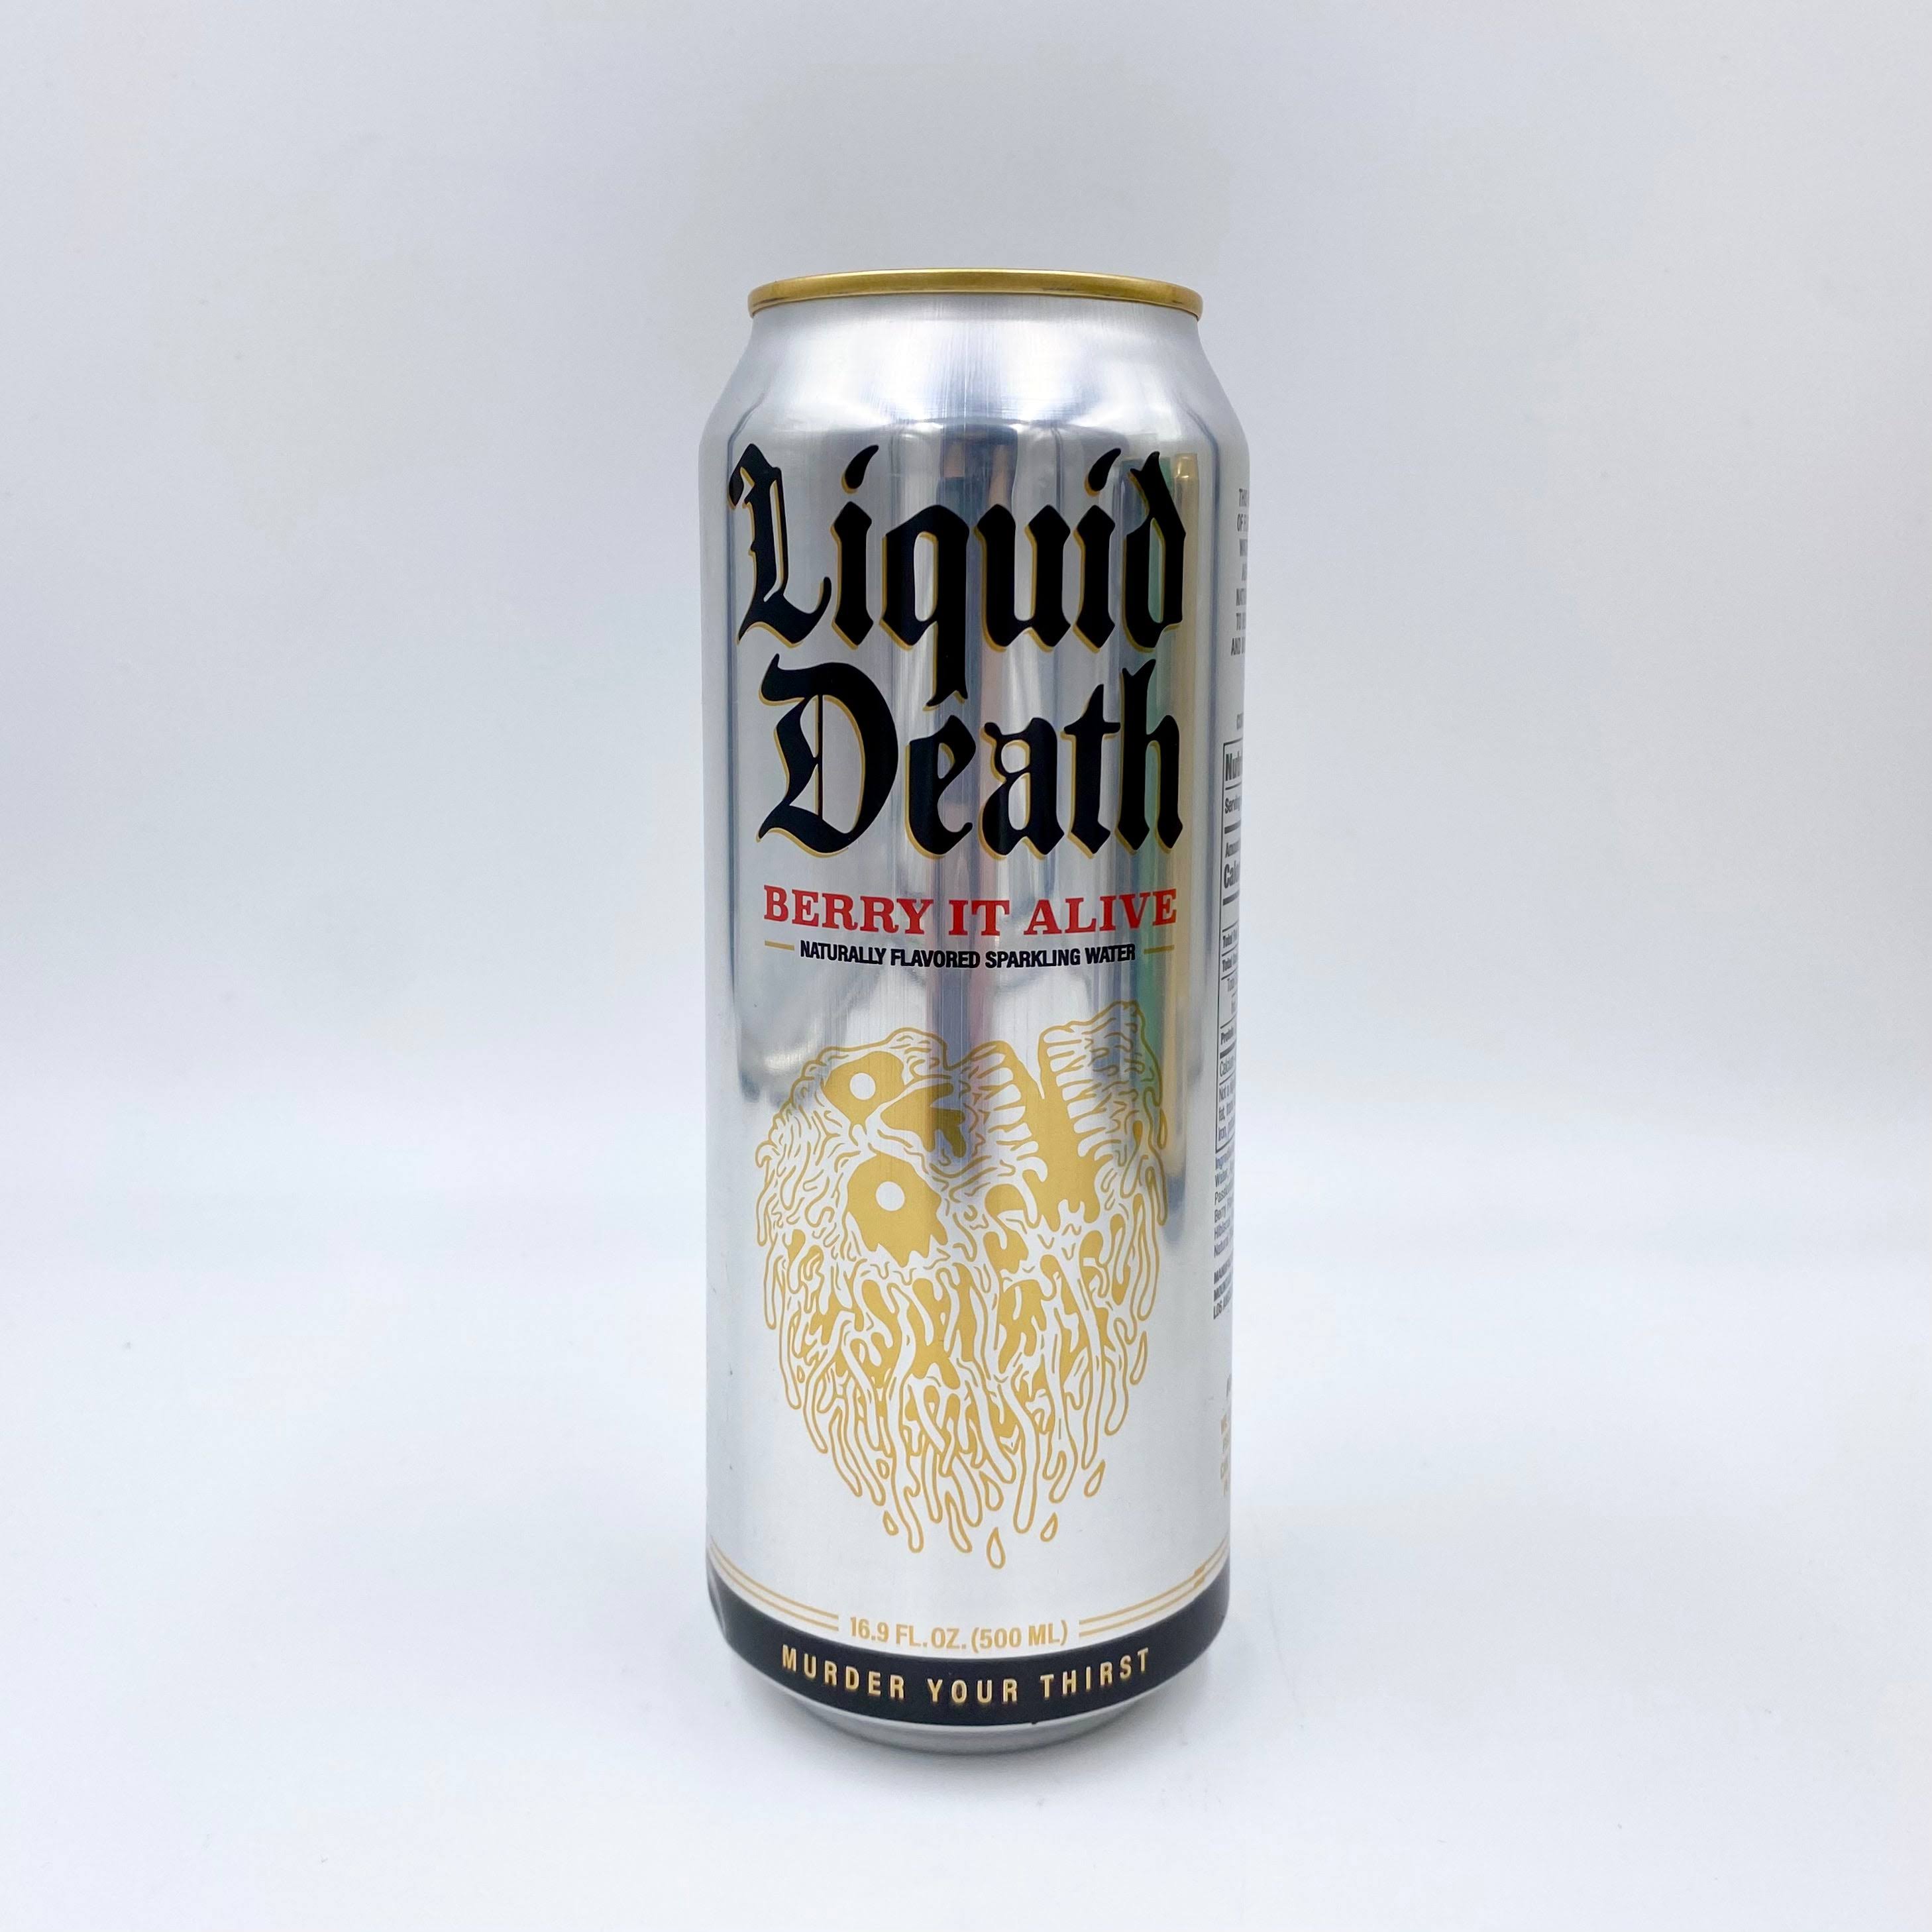 Liquid Death Berry It Alive 500 ml